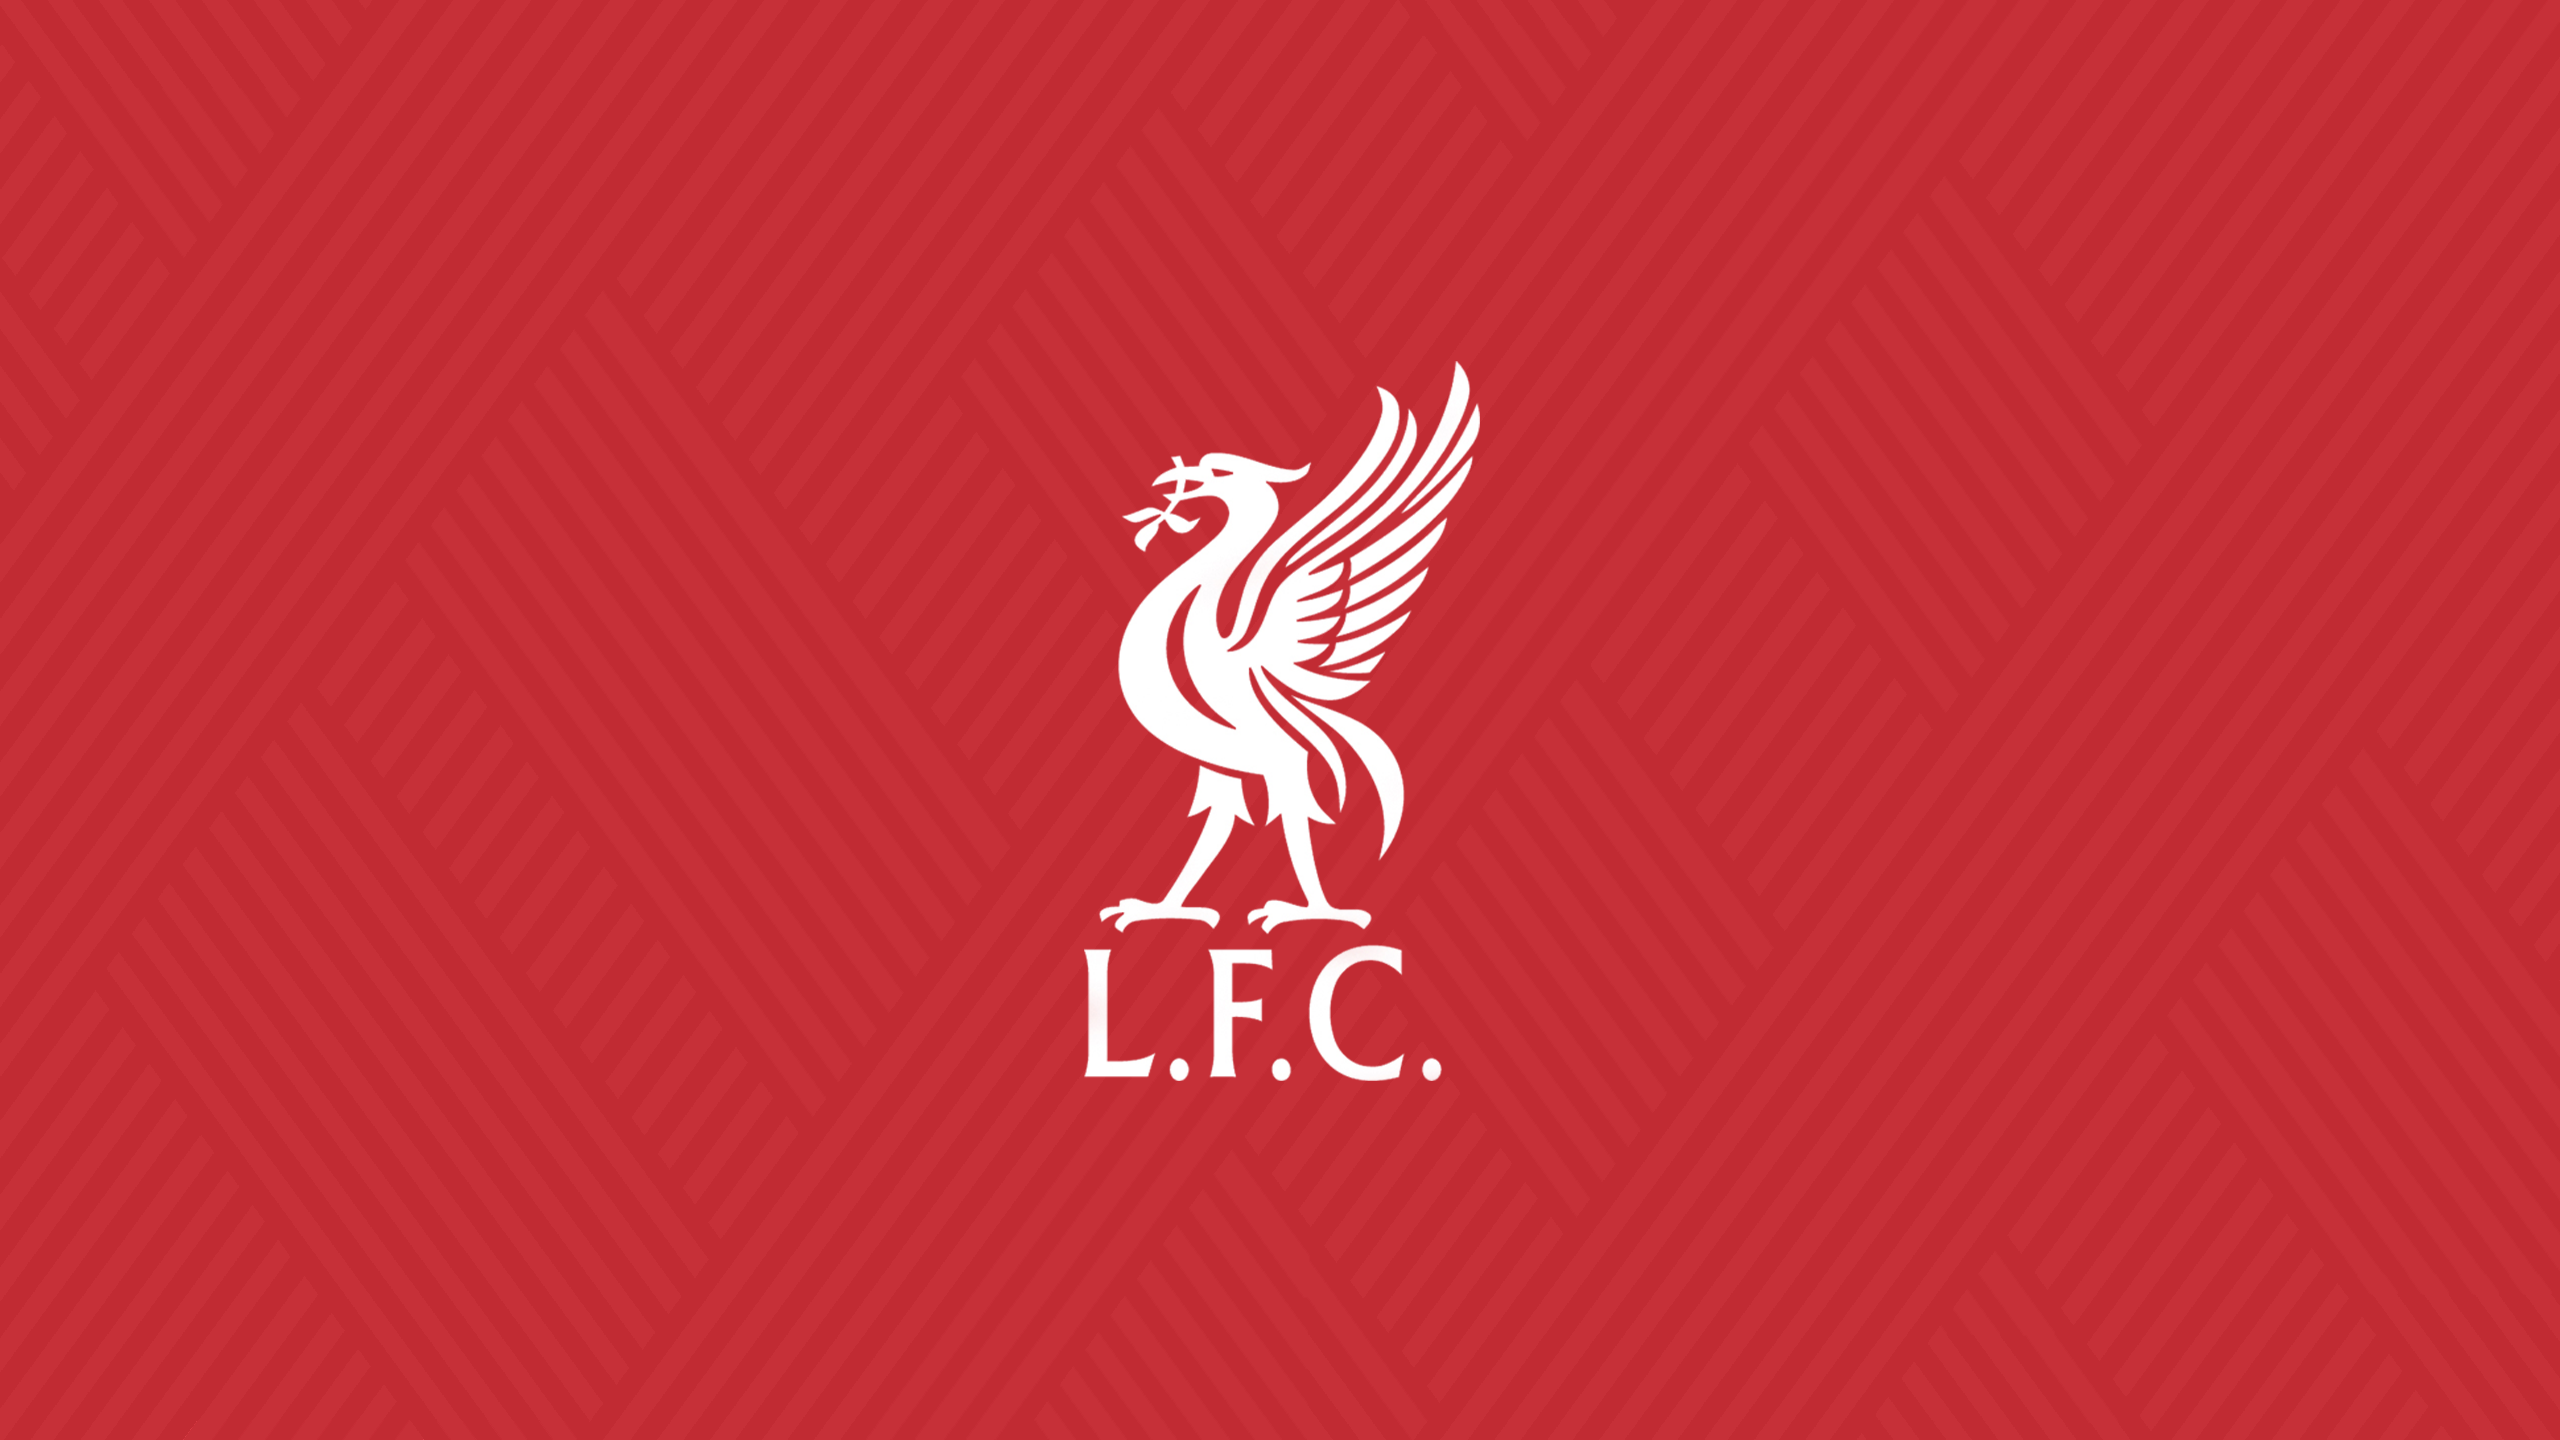 Liverpool F.C. - English Premier League - Soccer - Square Bettor